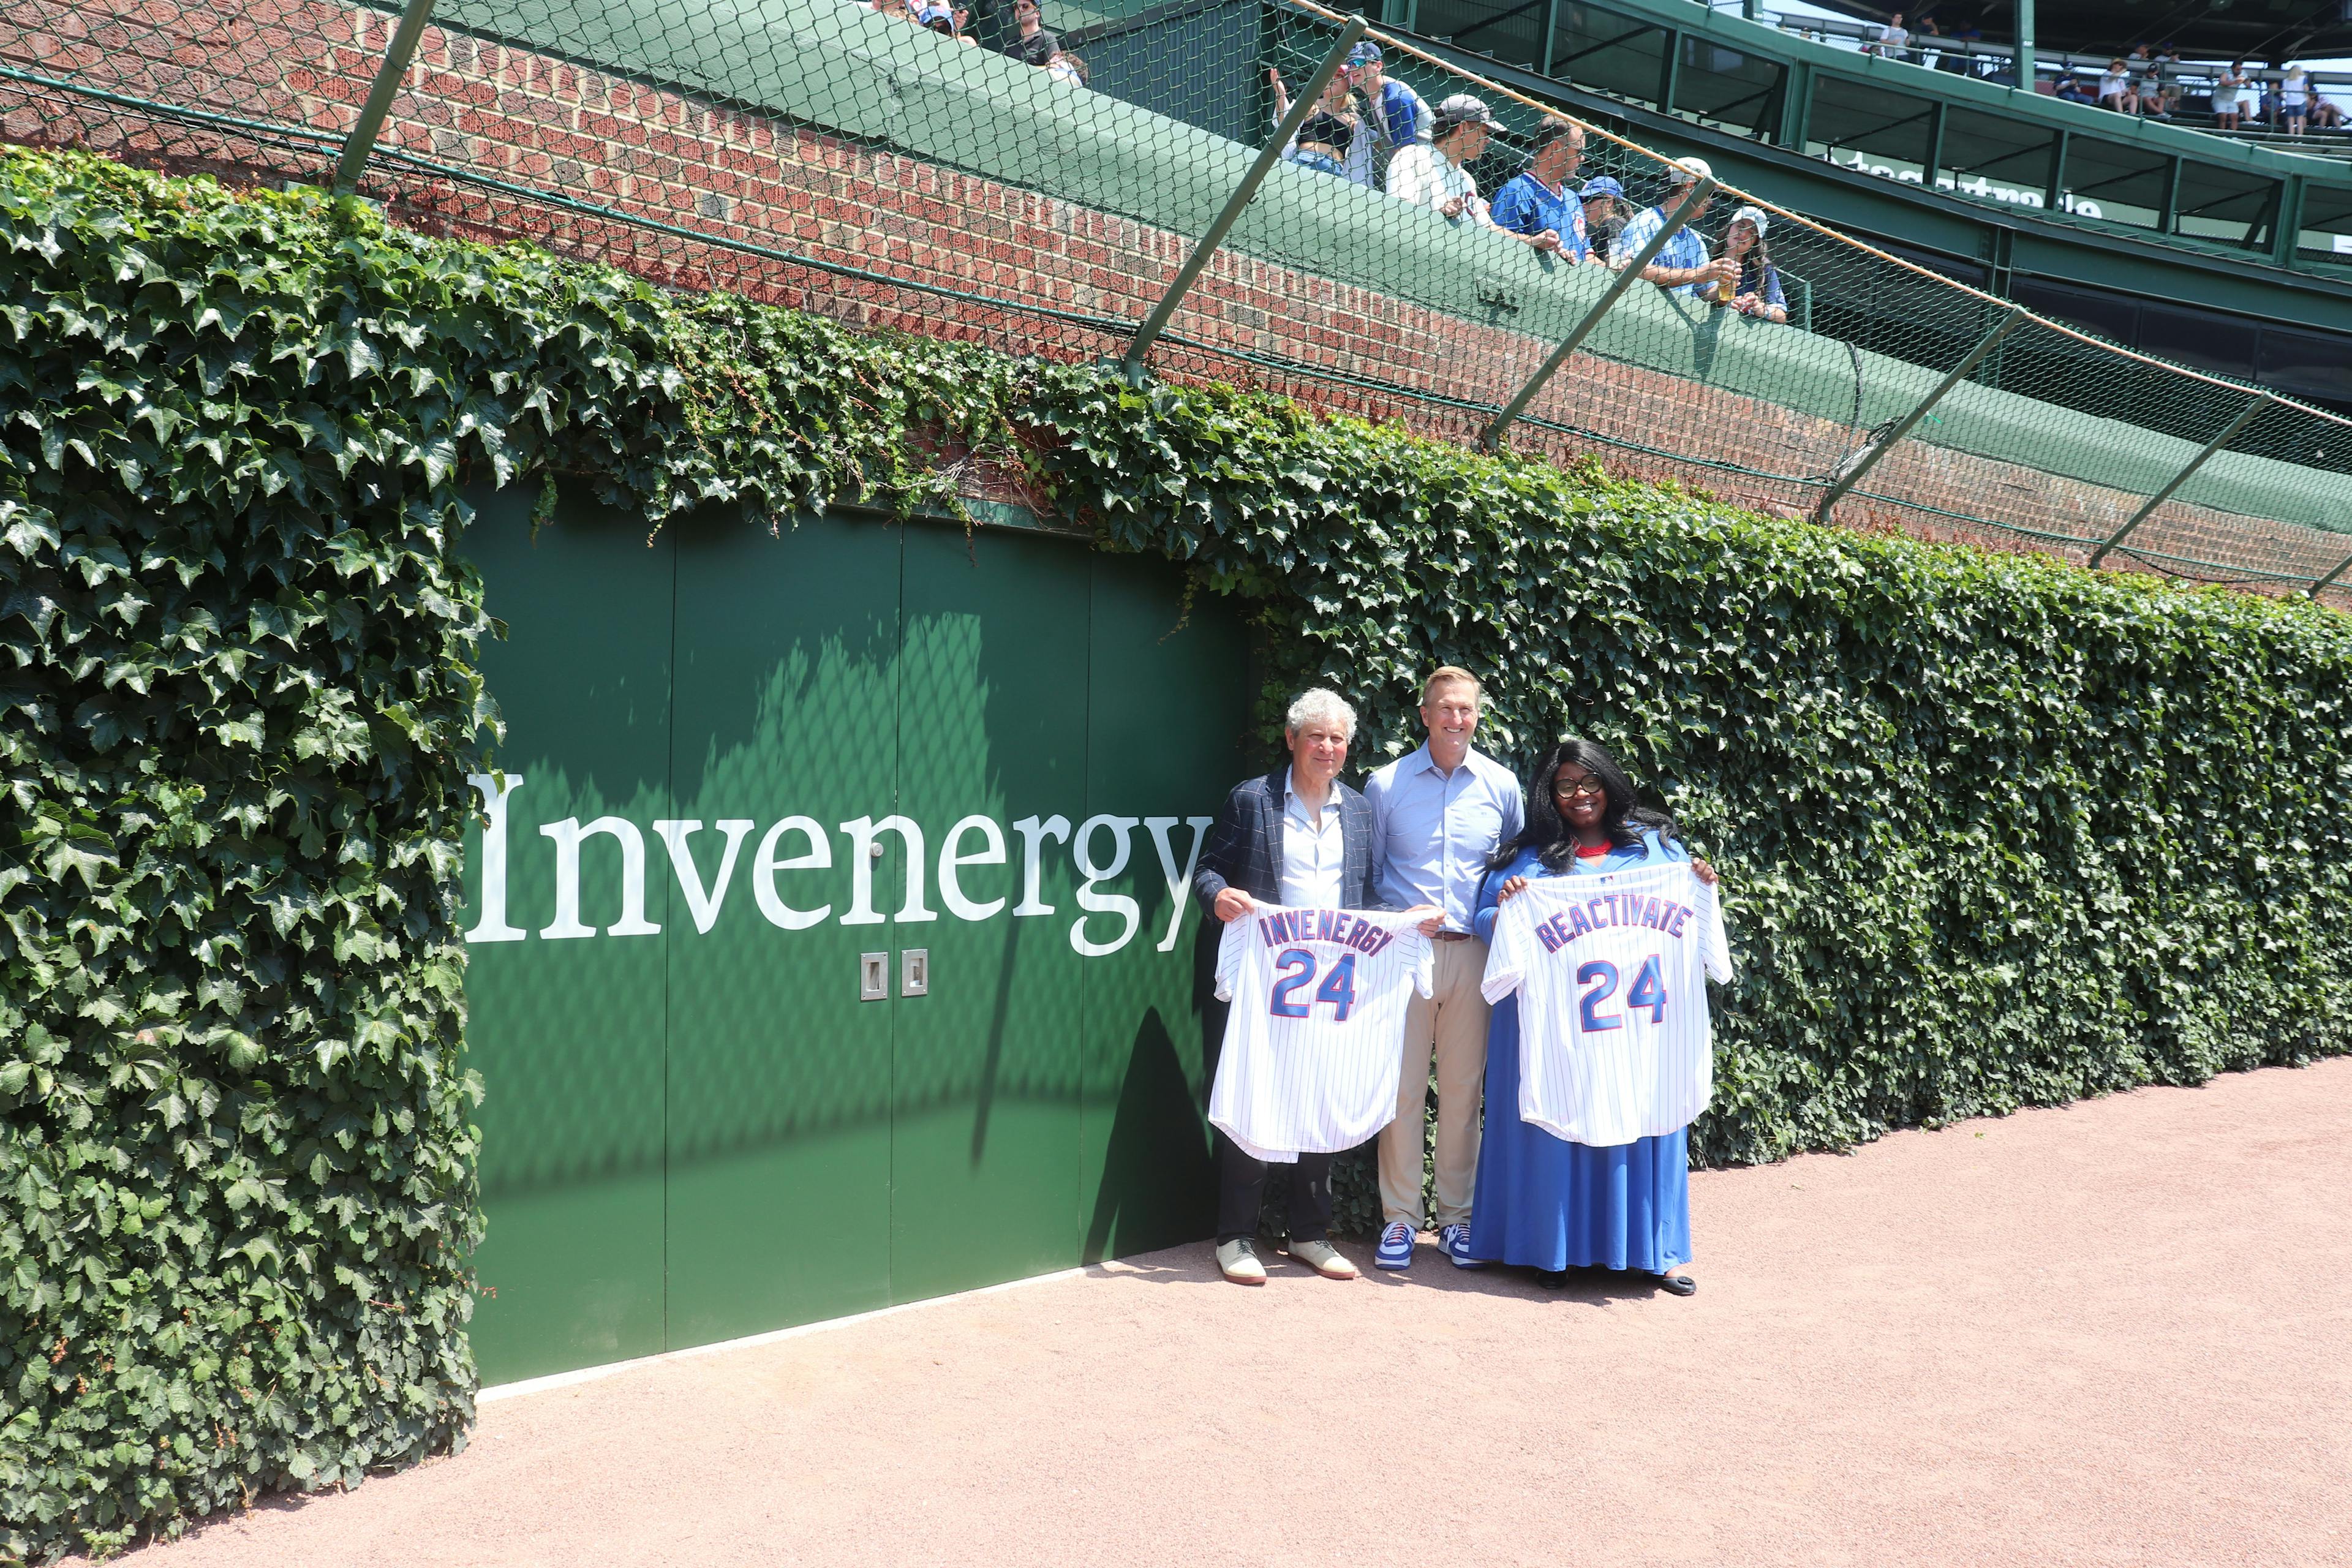 Chicago Cubs Invenergy Partnership Photo (1).JPG